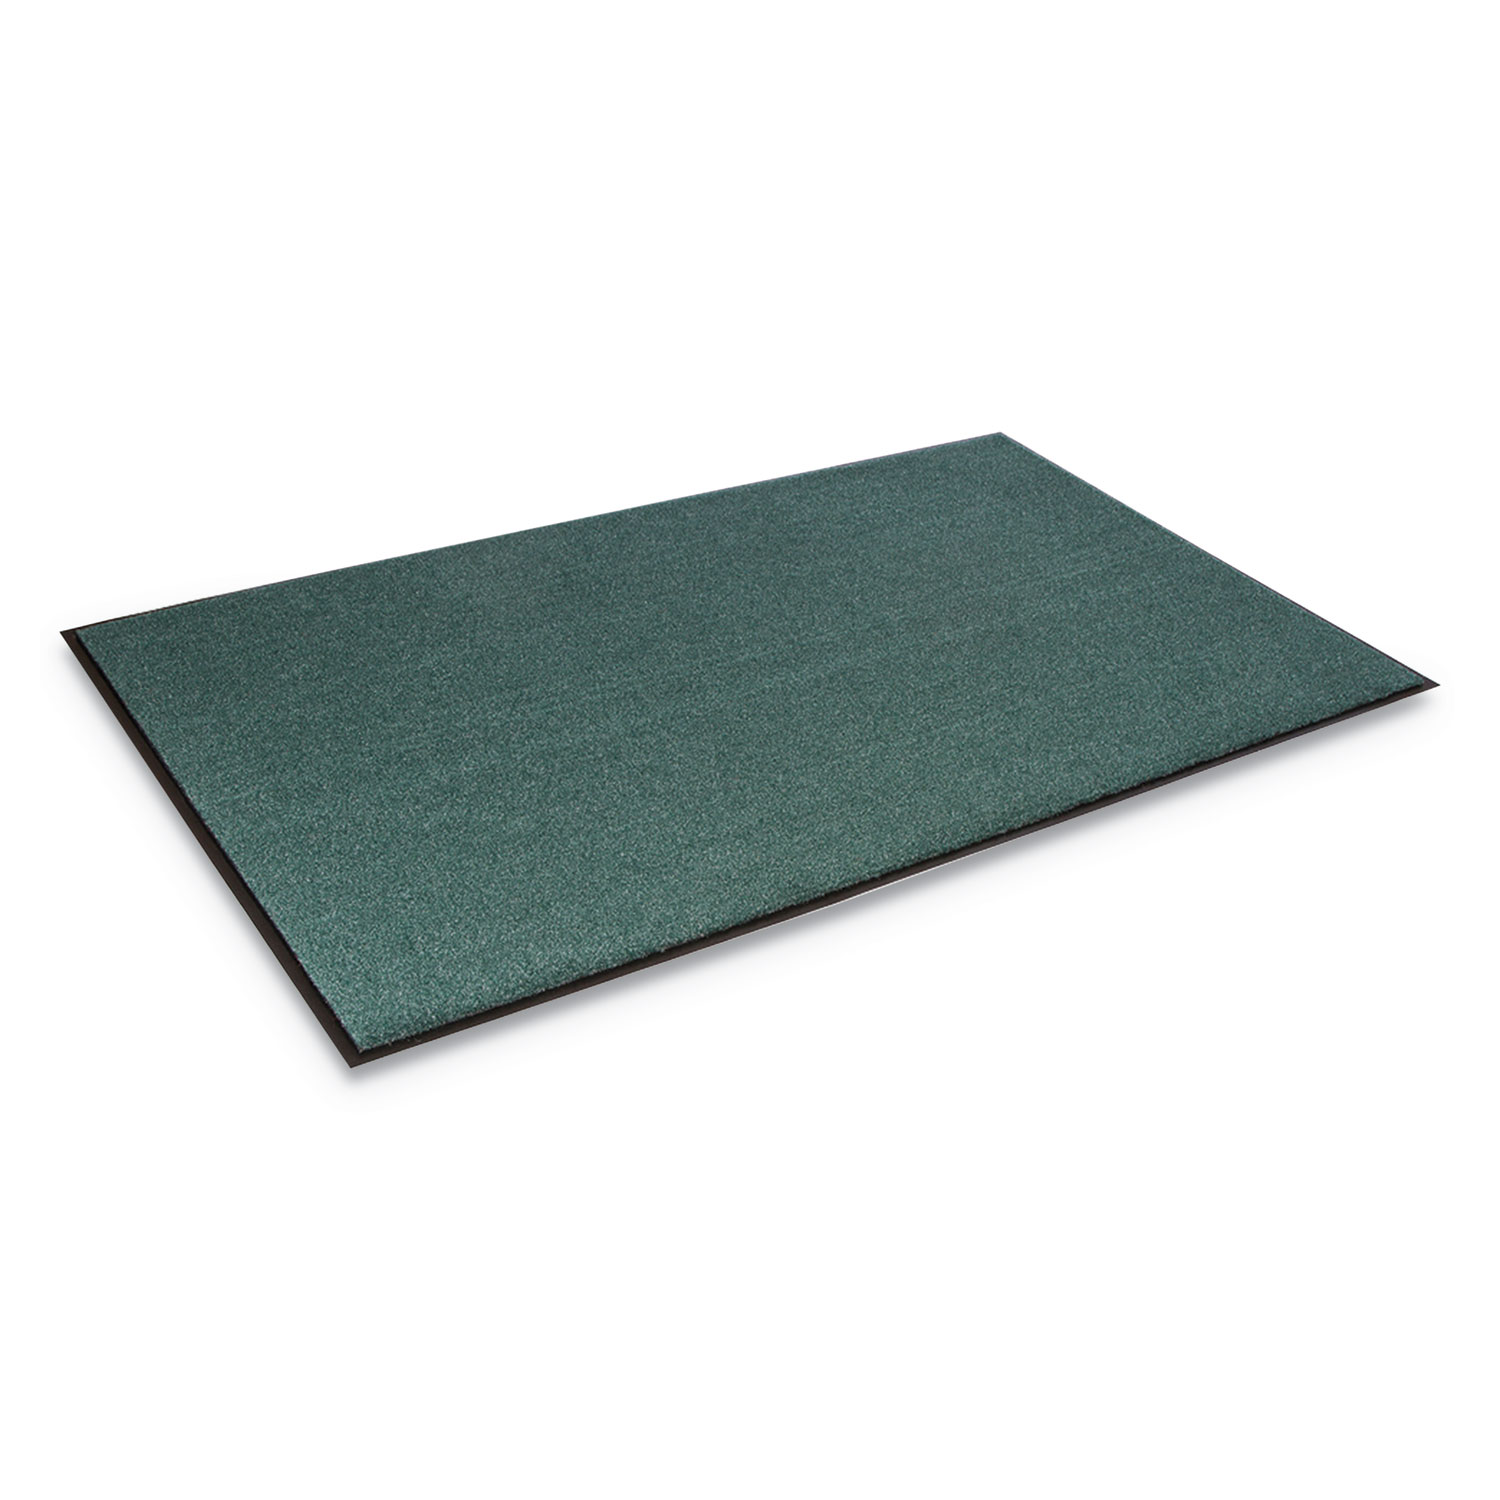  Crown GS 0046EG Rely-On Olefin Indoor Wiper Mat, 48 x 72, Evergreen (CWNGS0046EG) 